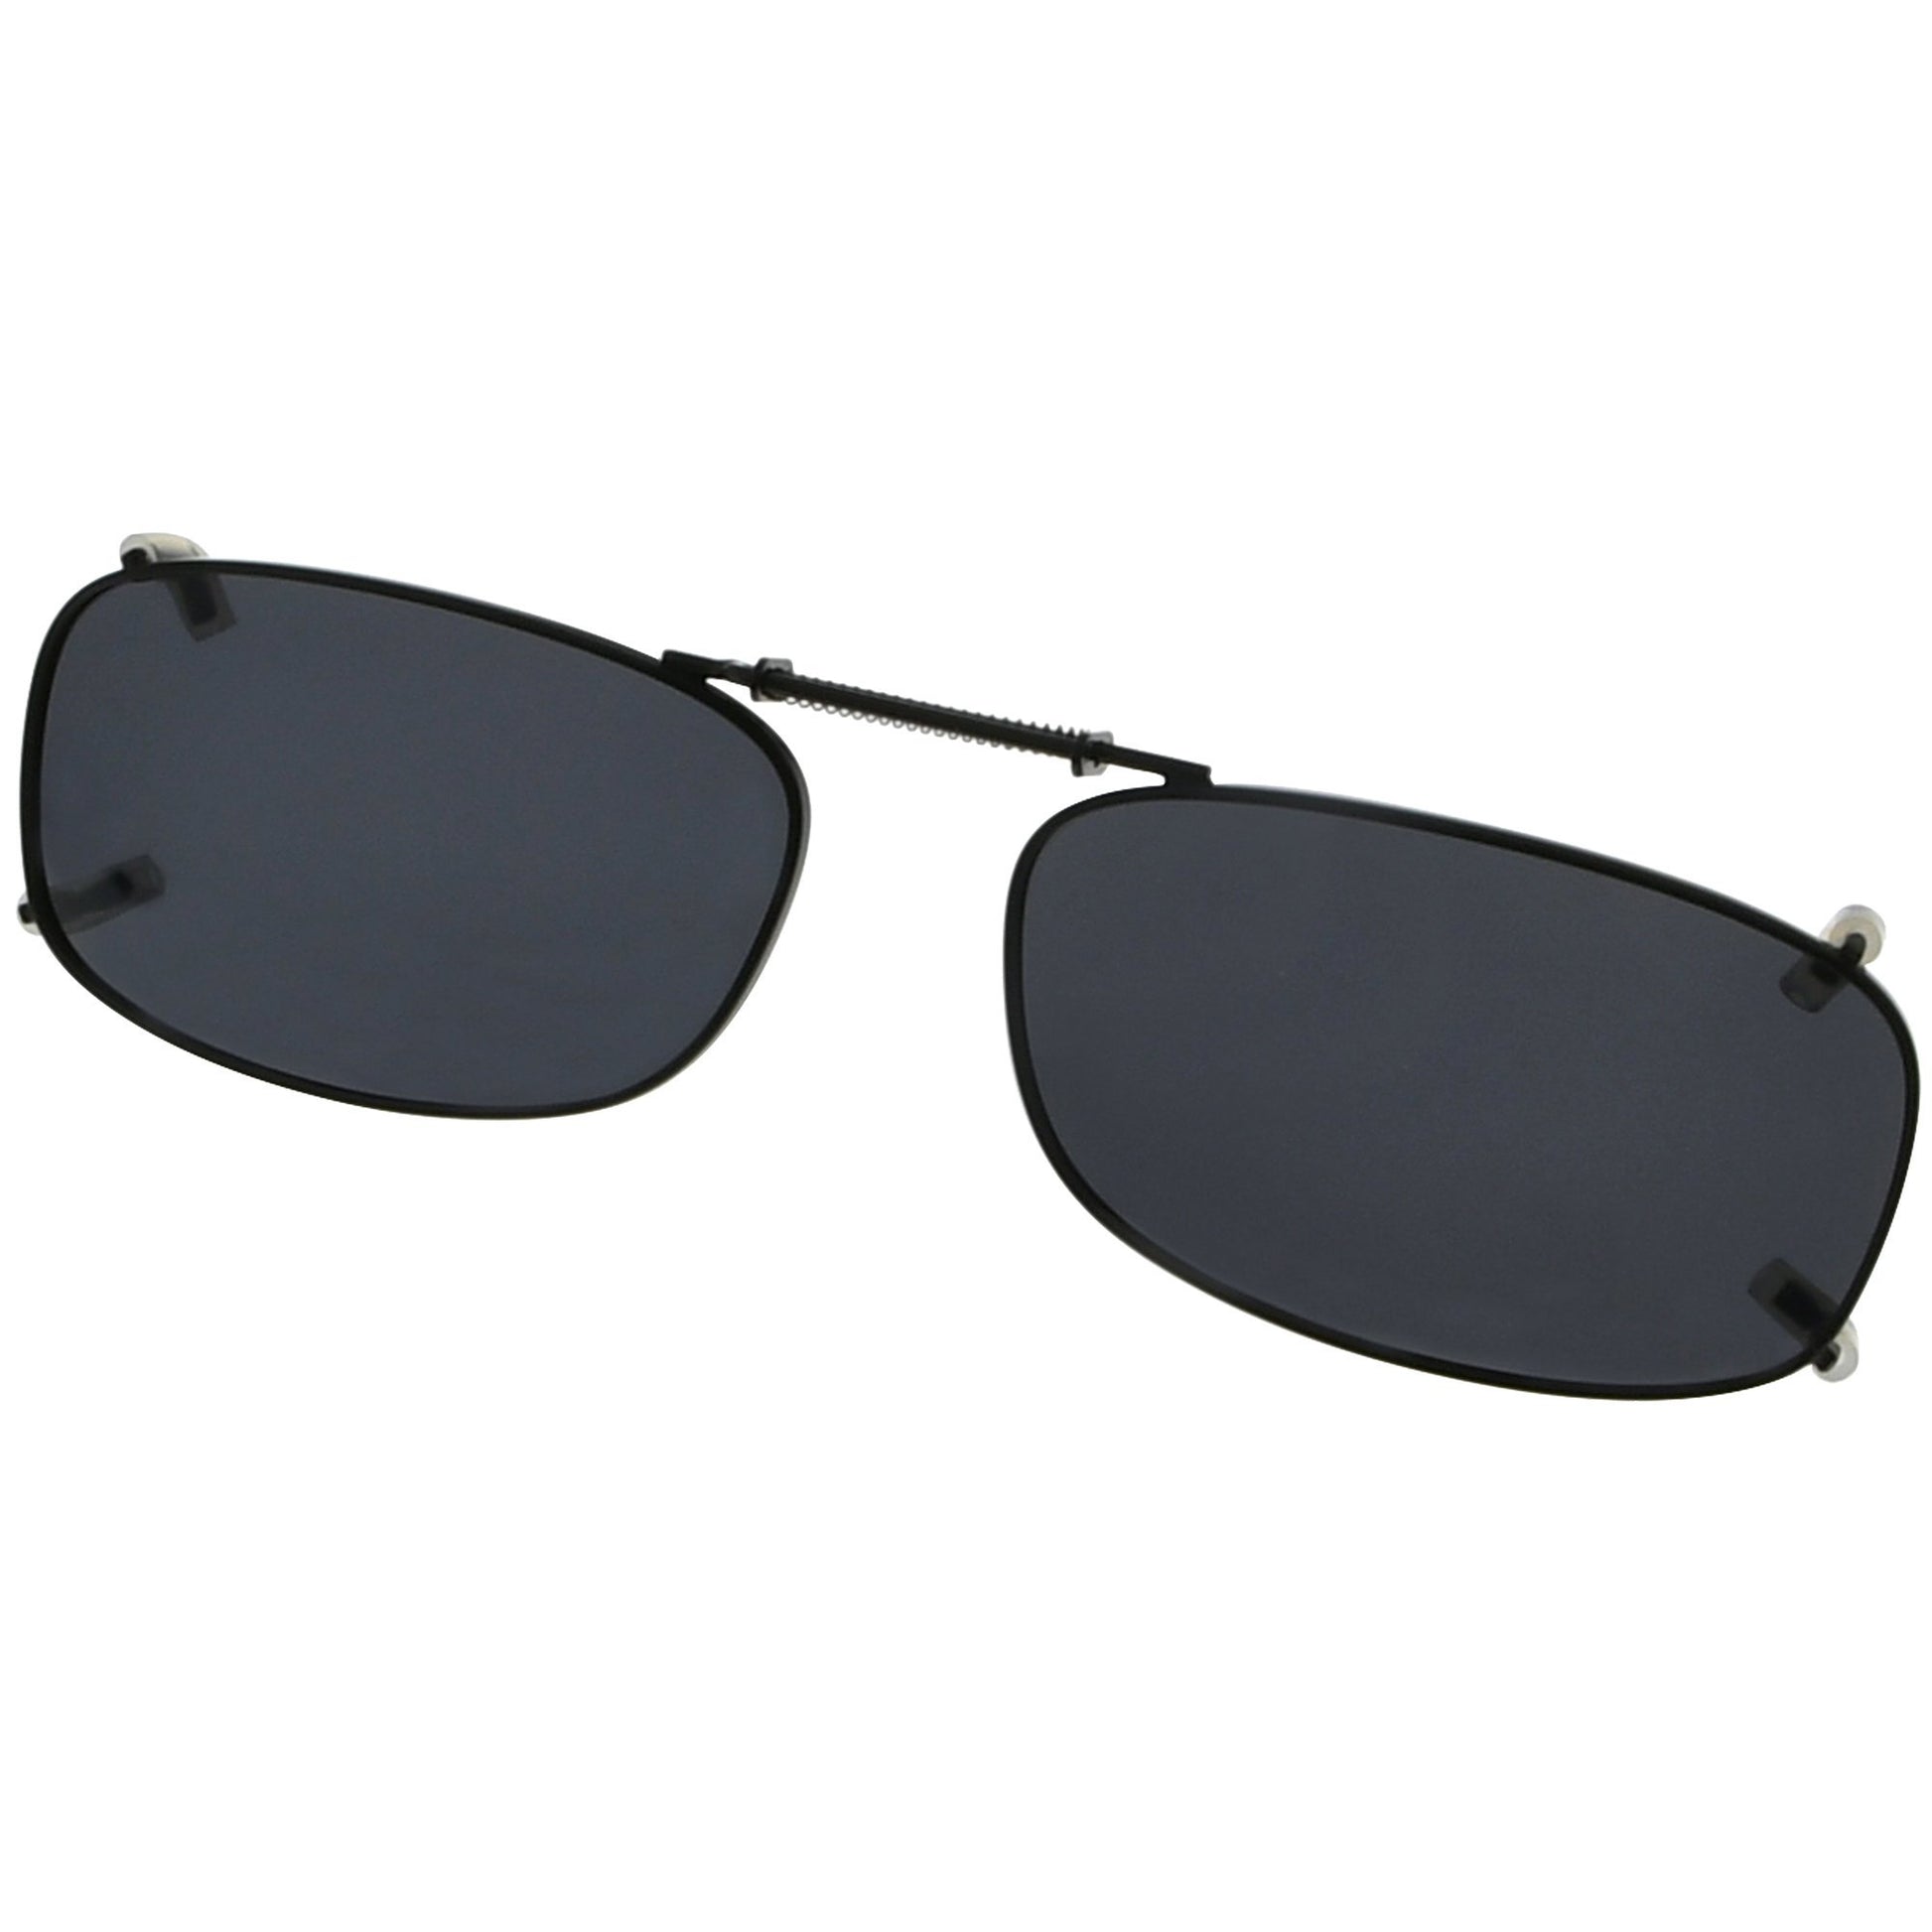 Comfort Sunglasses Clip On Polarized Grey C85